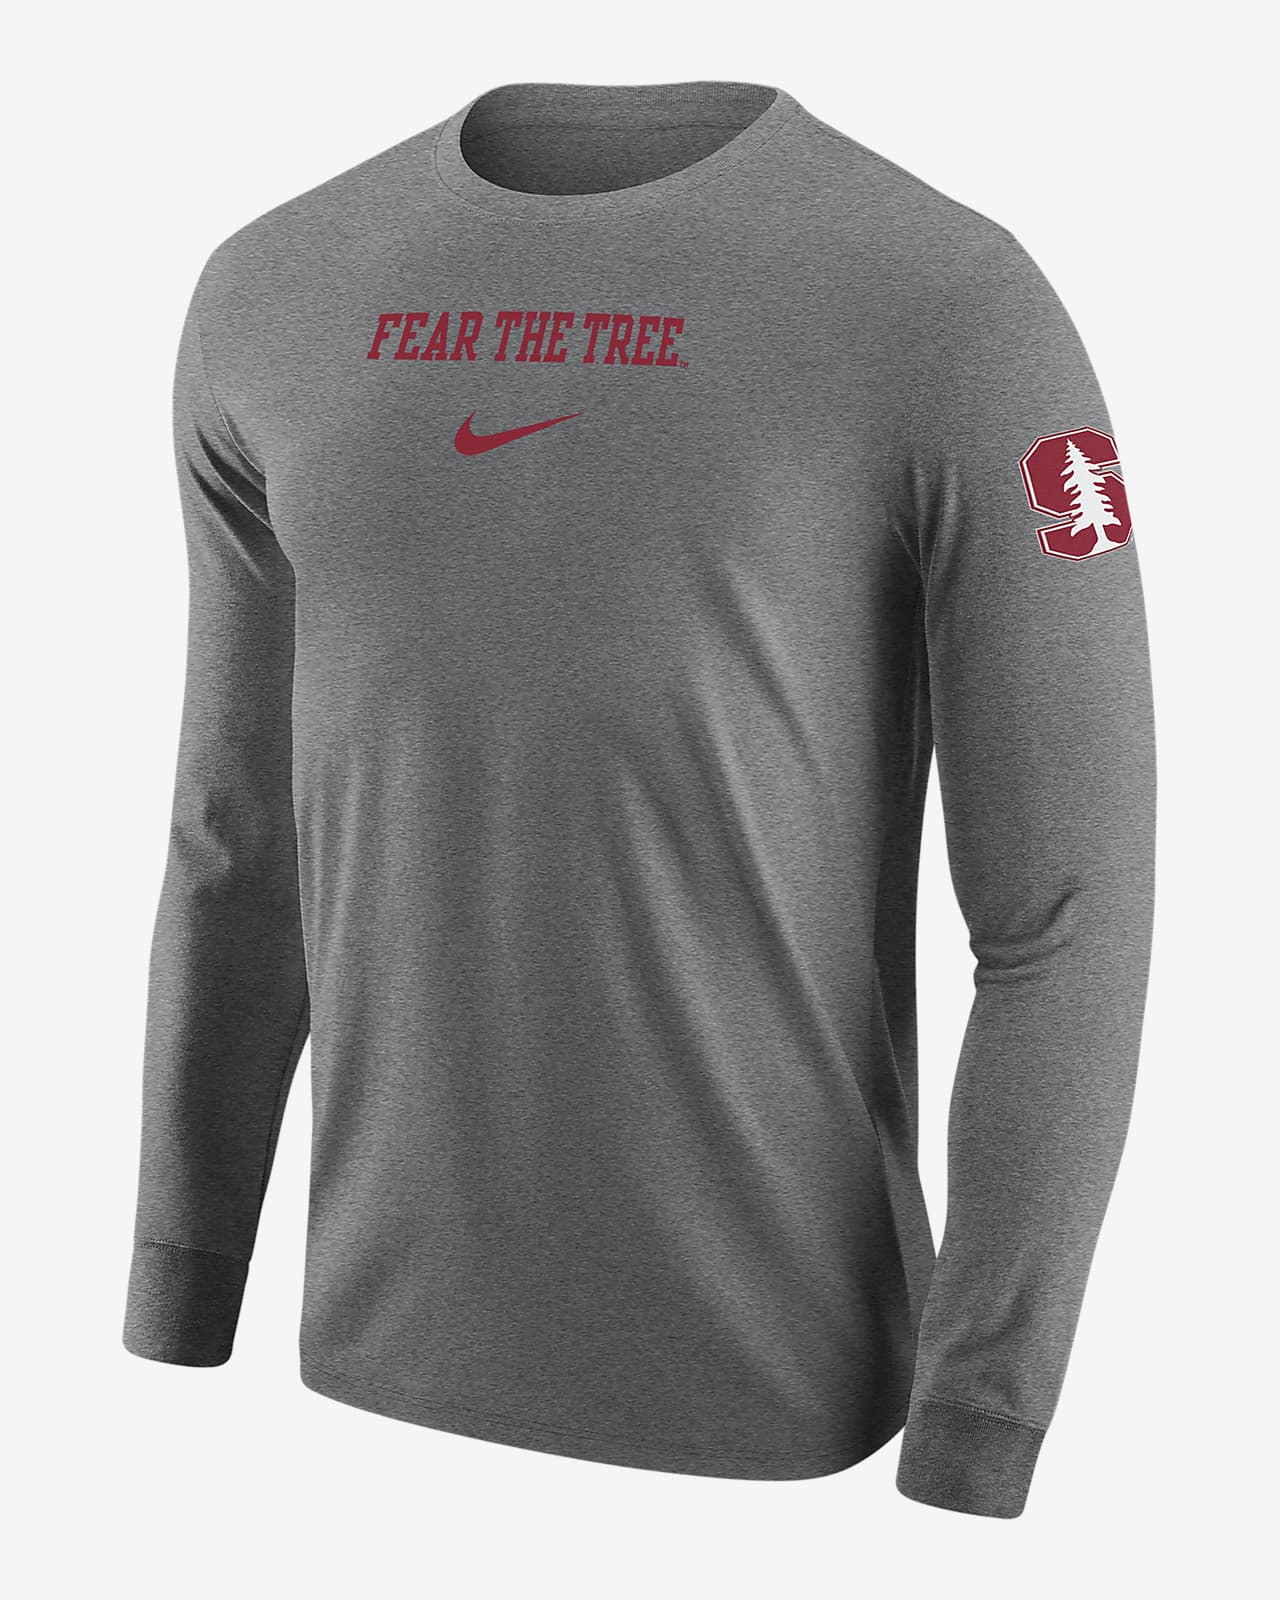 Stanford Men's Nike College Long-Sleeve T-Shirt